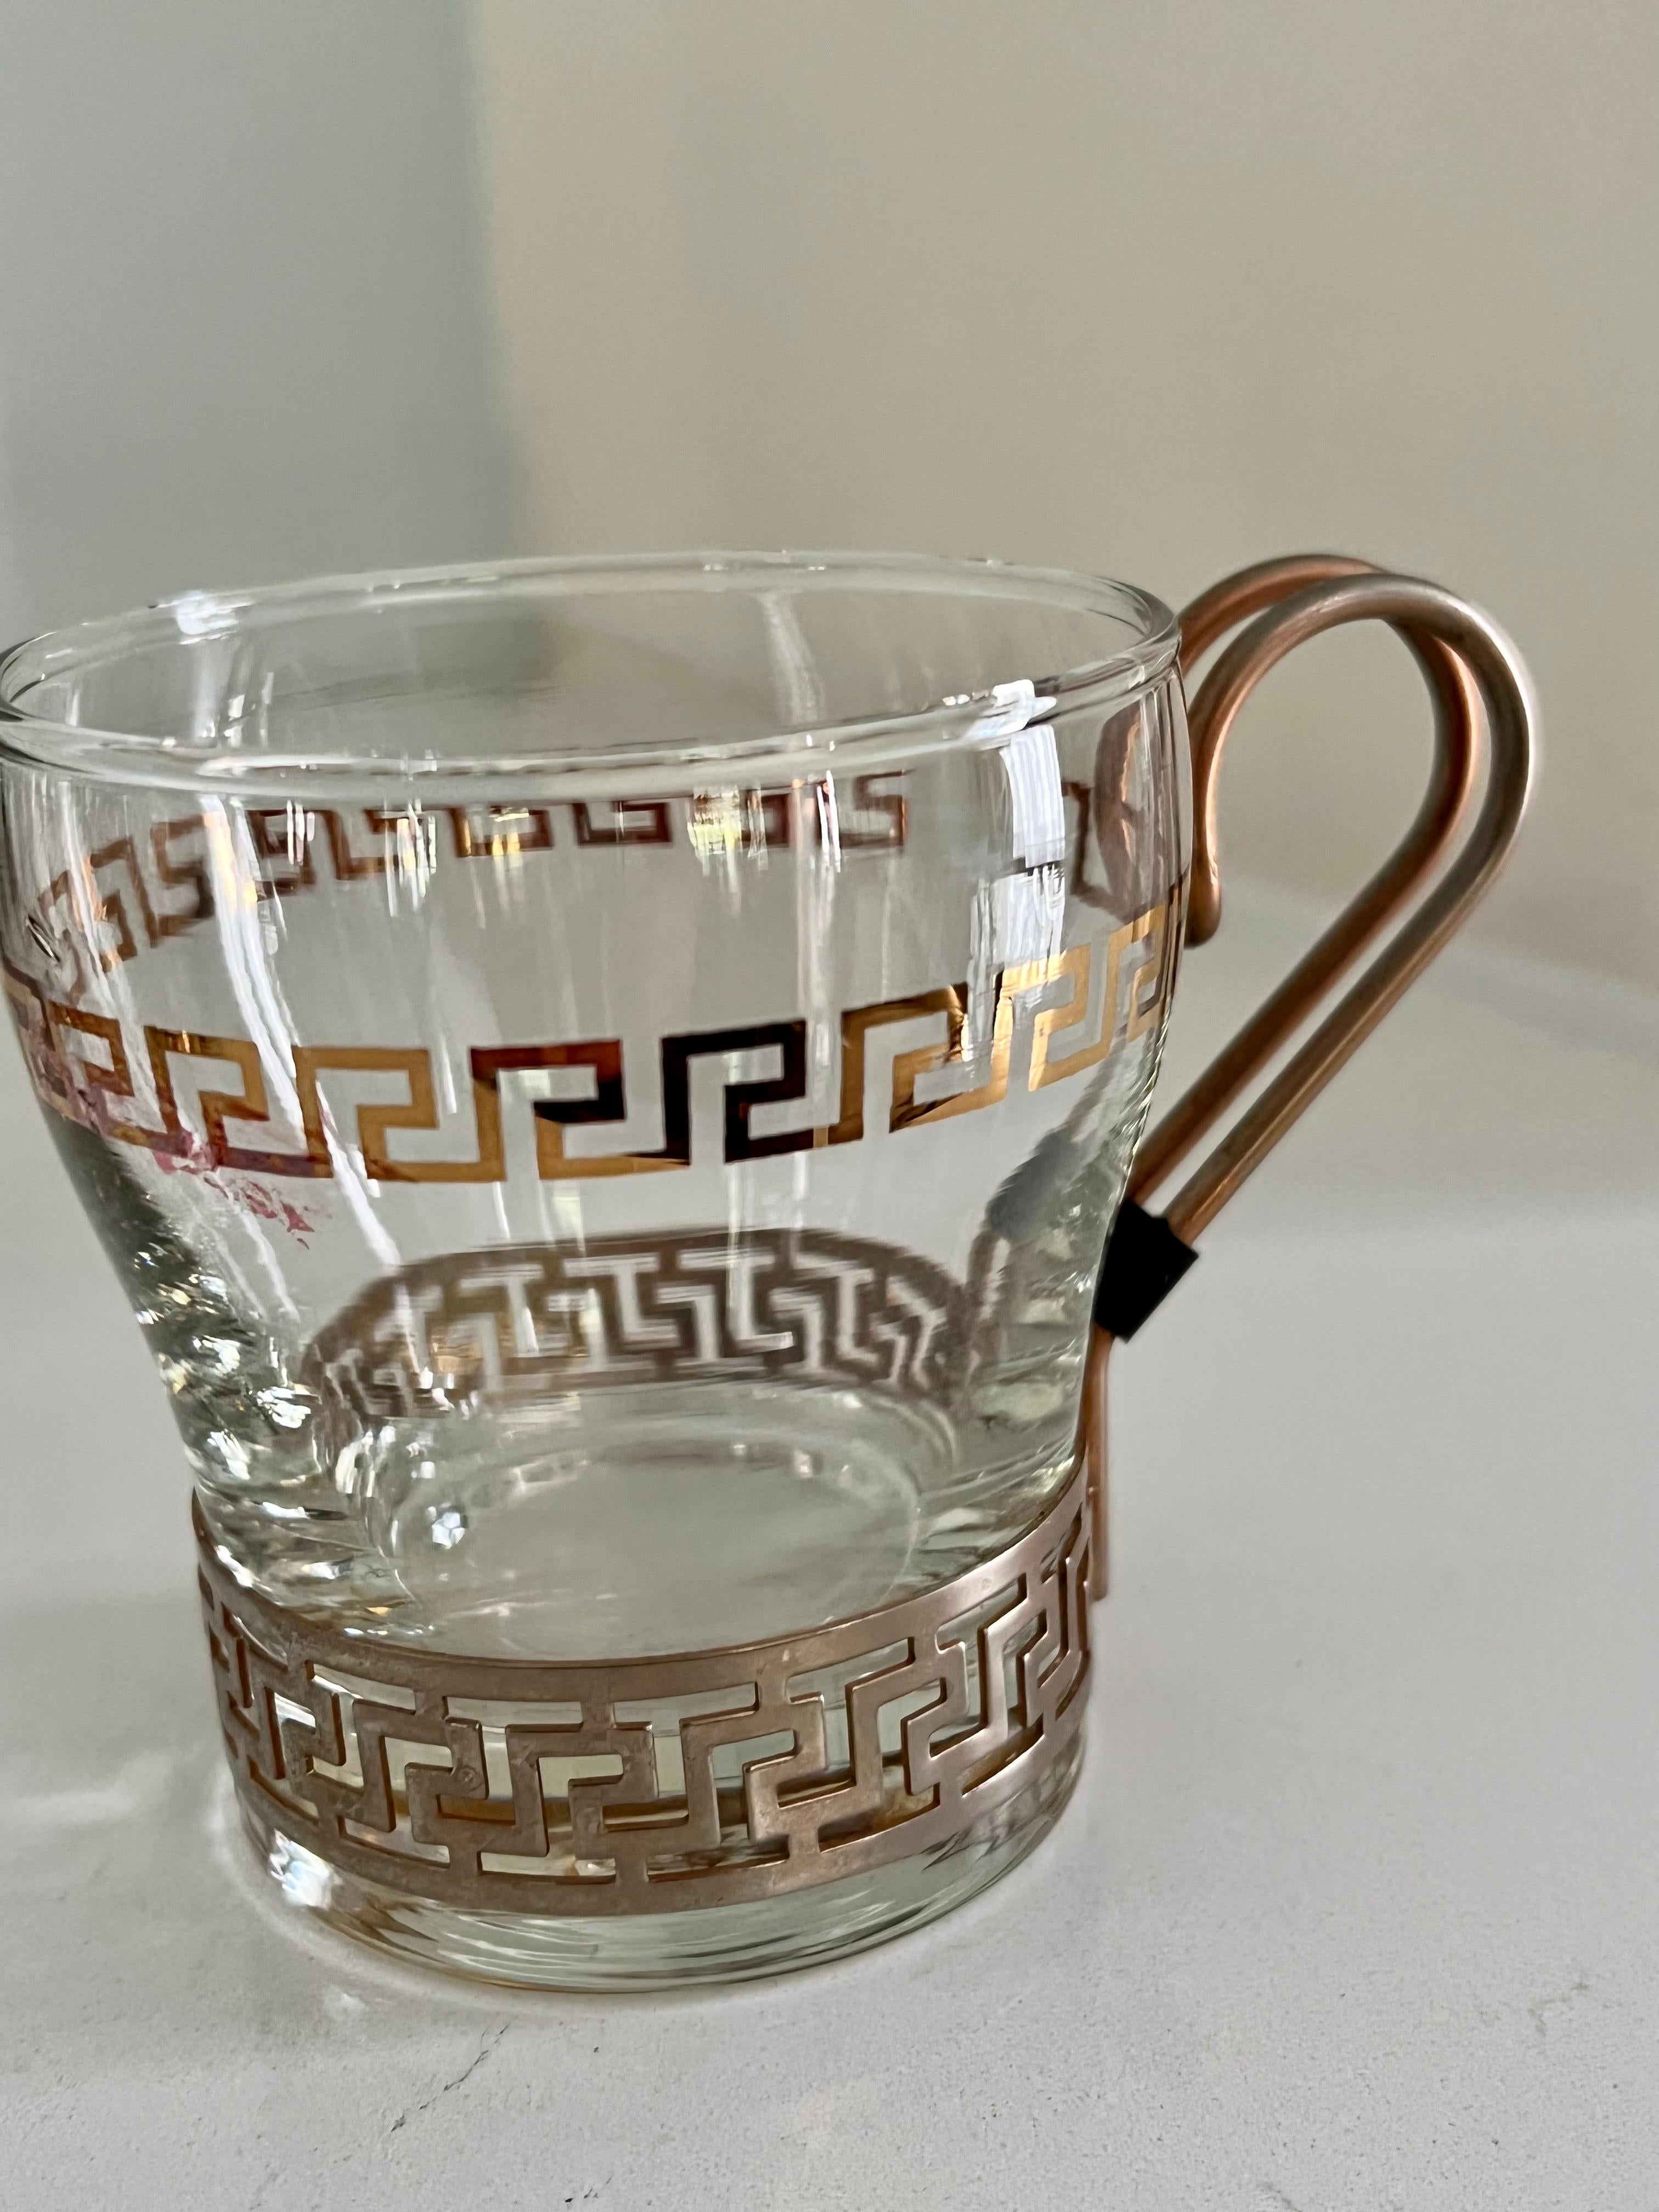 Set of 6 Glasses in Copper Holder with Greek Key Details For Sale 3